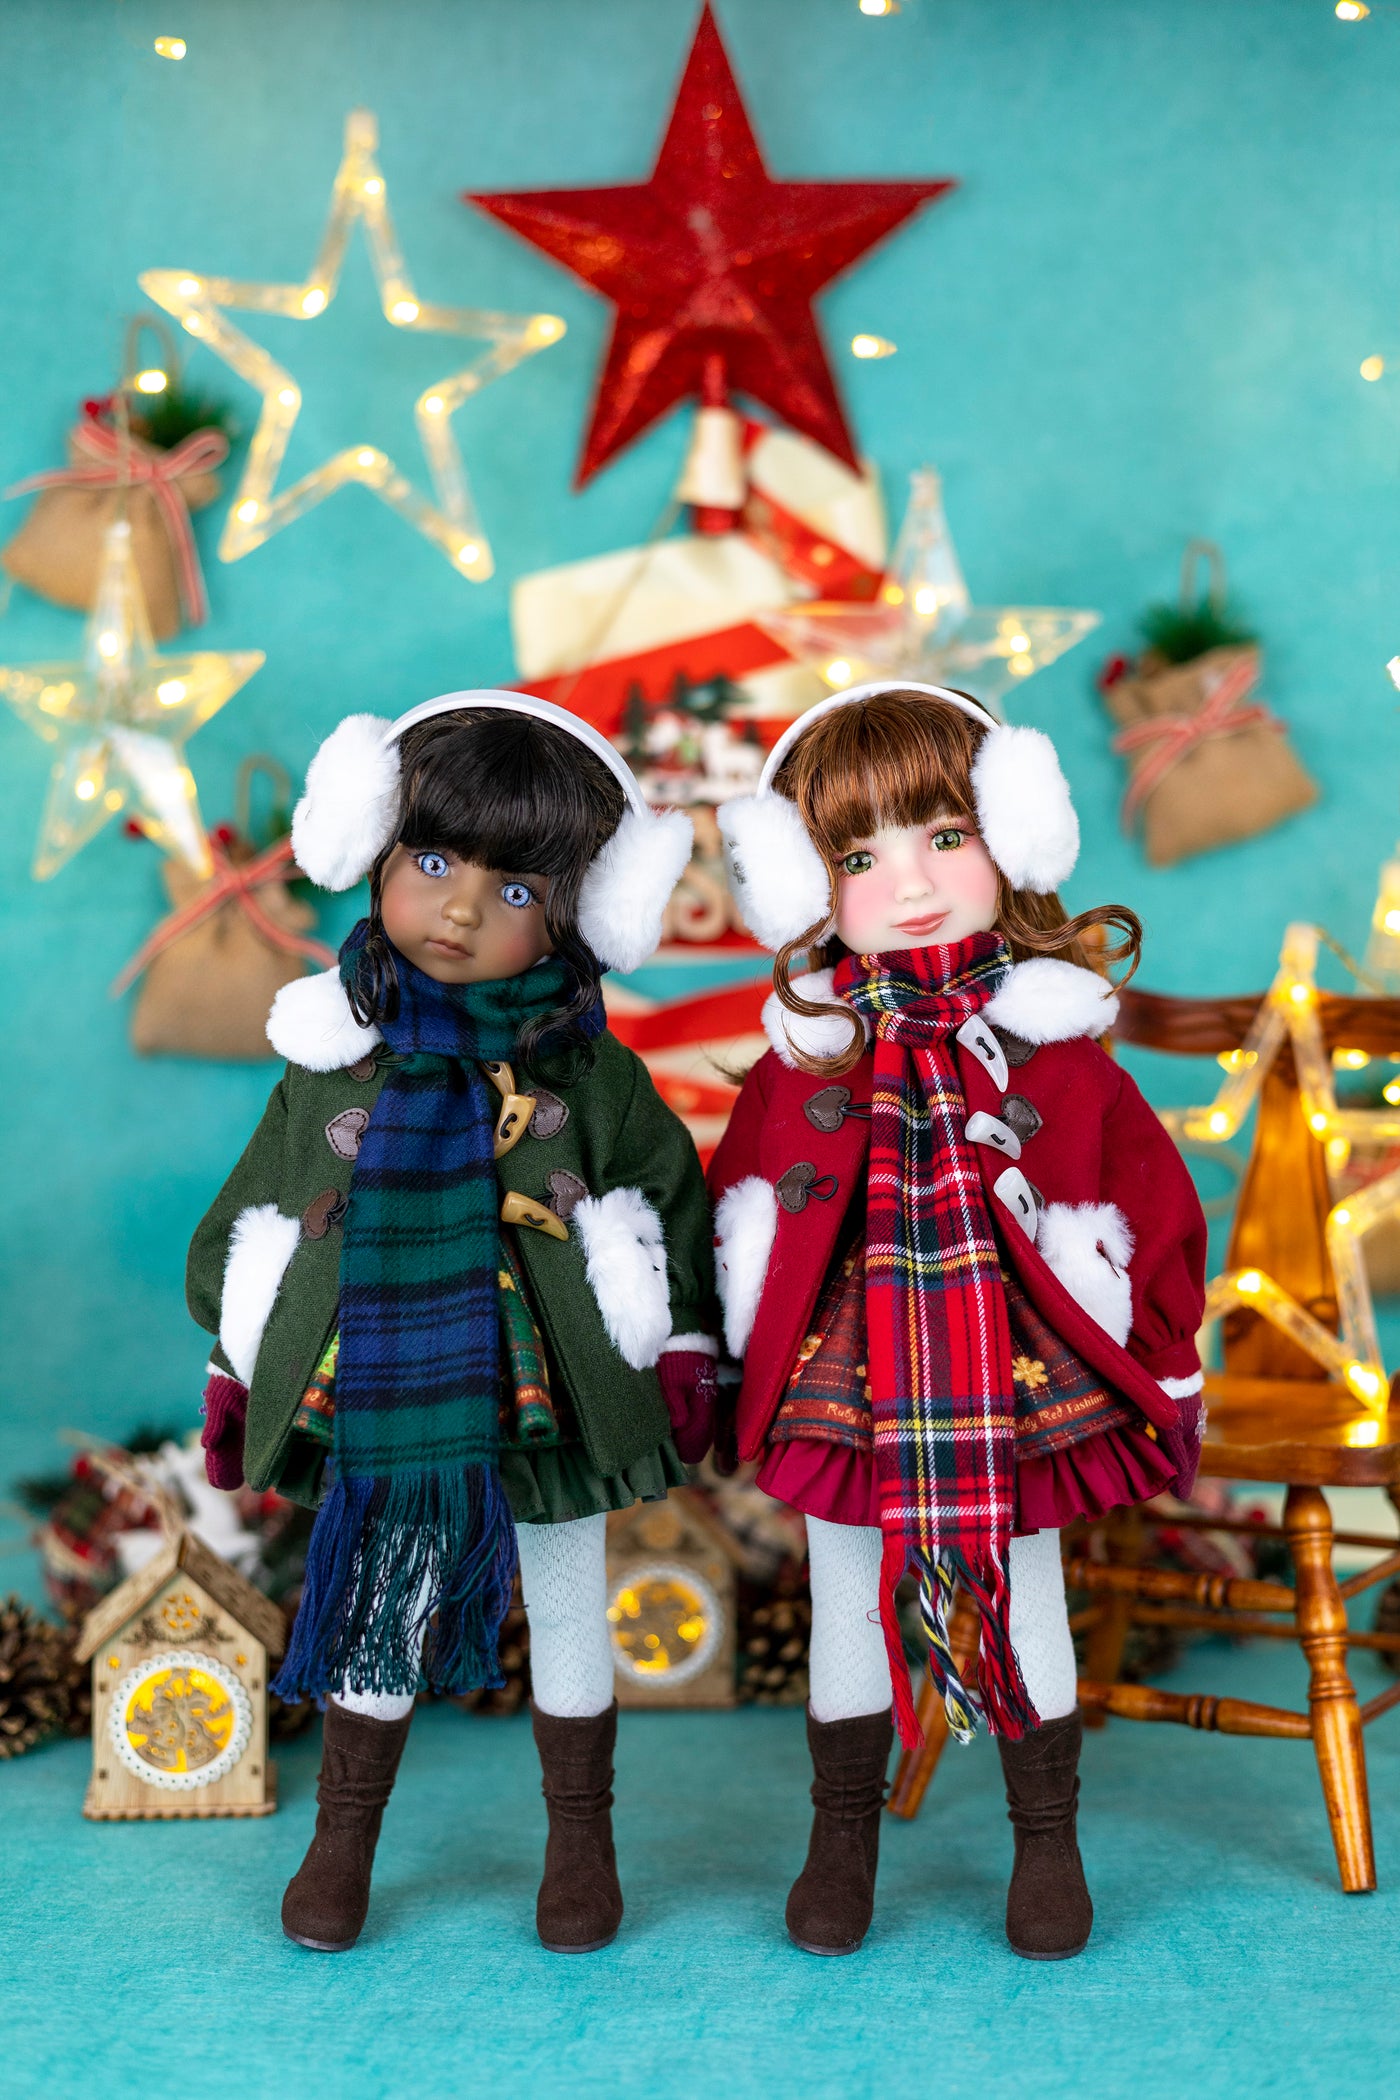 Robin 2022 Christmas Limited Edition - Ruby Red Fashion Friend doll